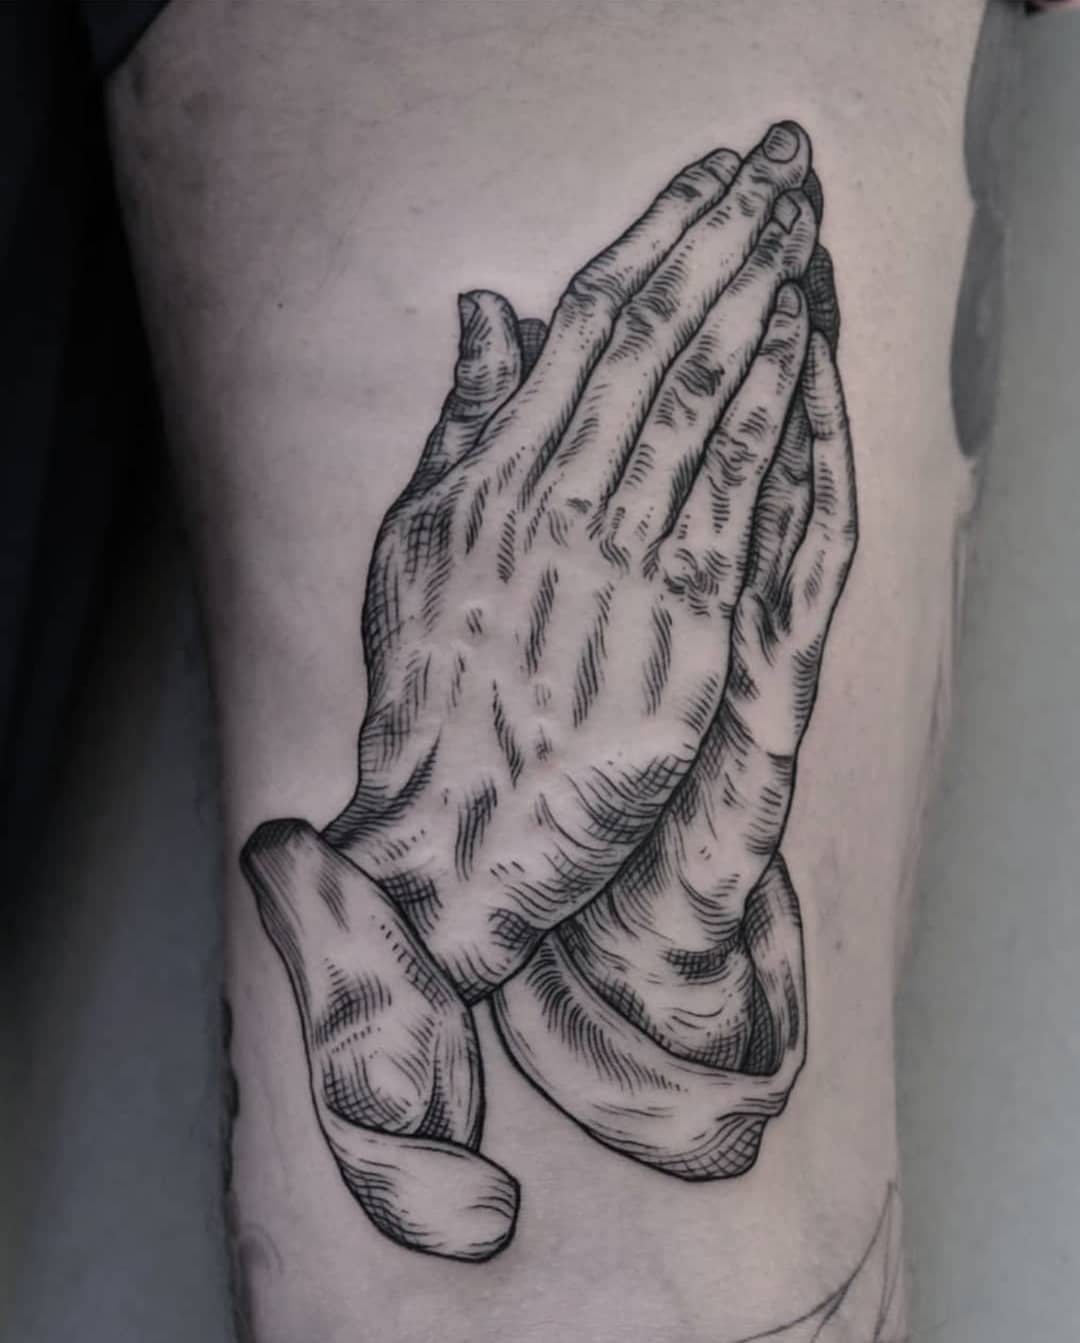 Dürer’s praying hands tattoo